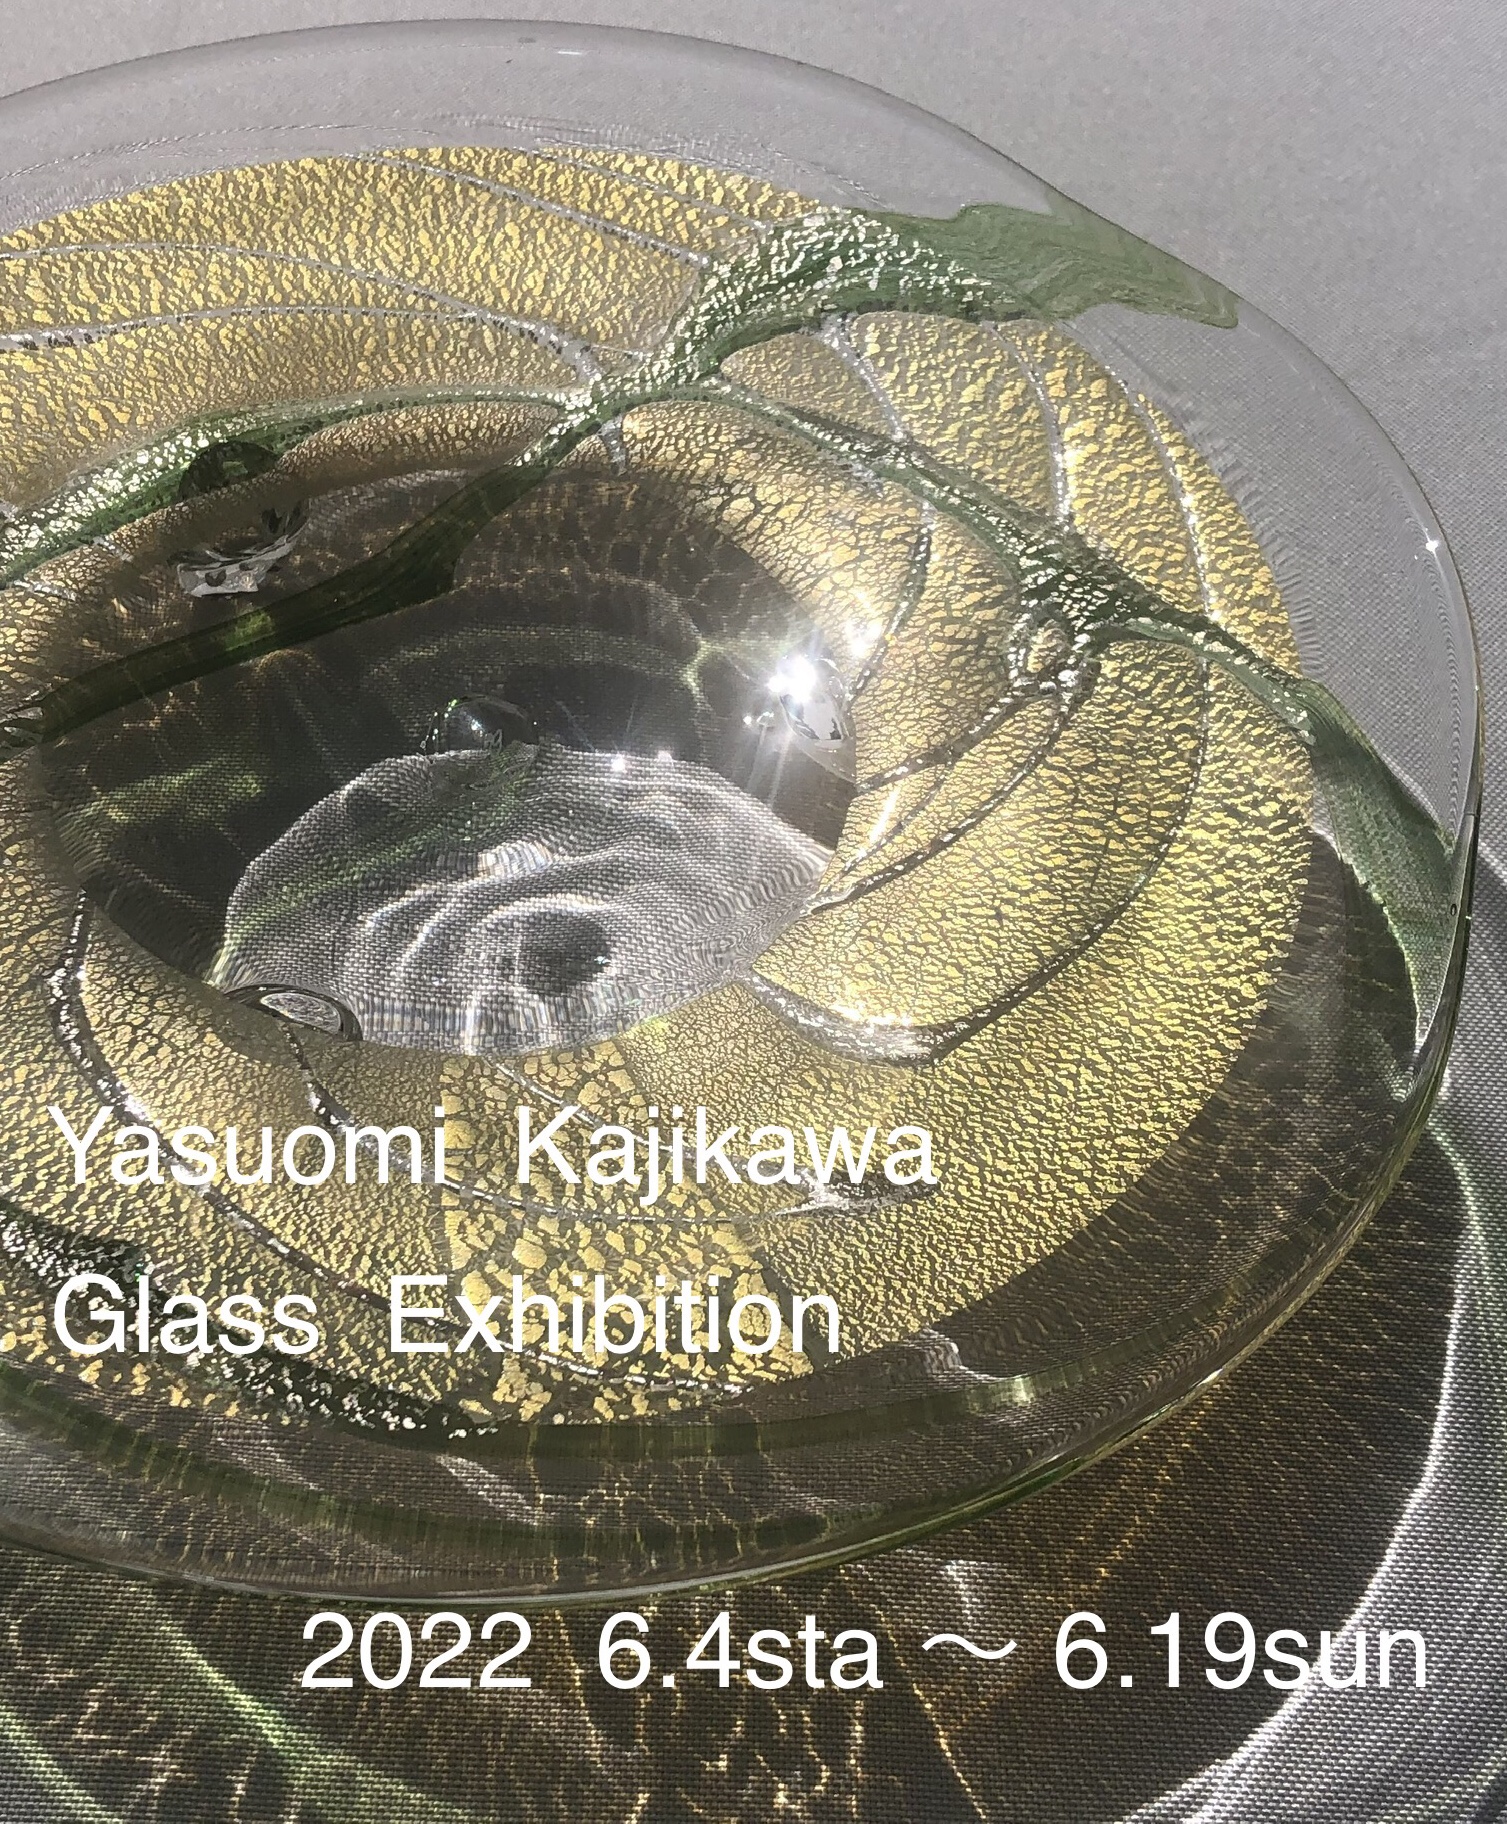 Ｙａｓｕｏｍｉ　Ｋａｊｉｋａｗａ　Glass Exhibition